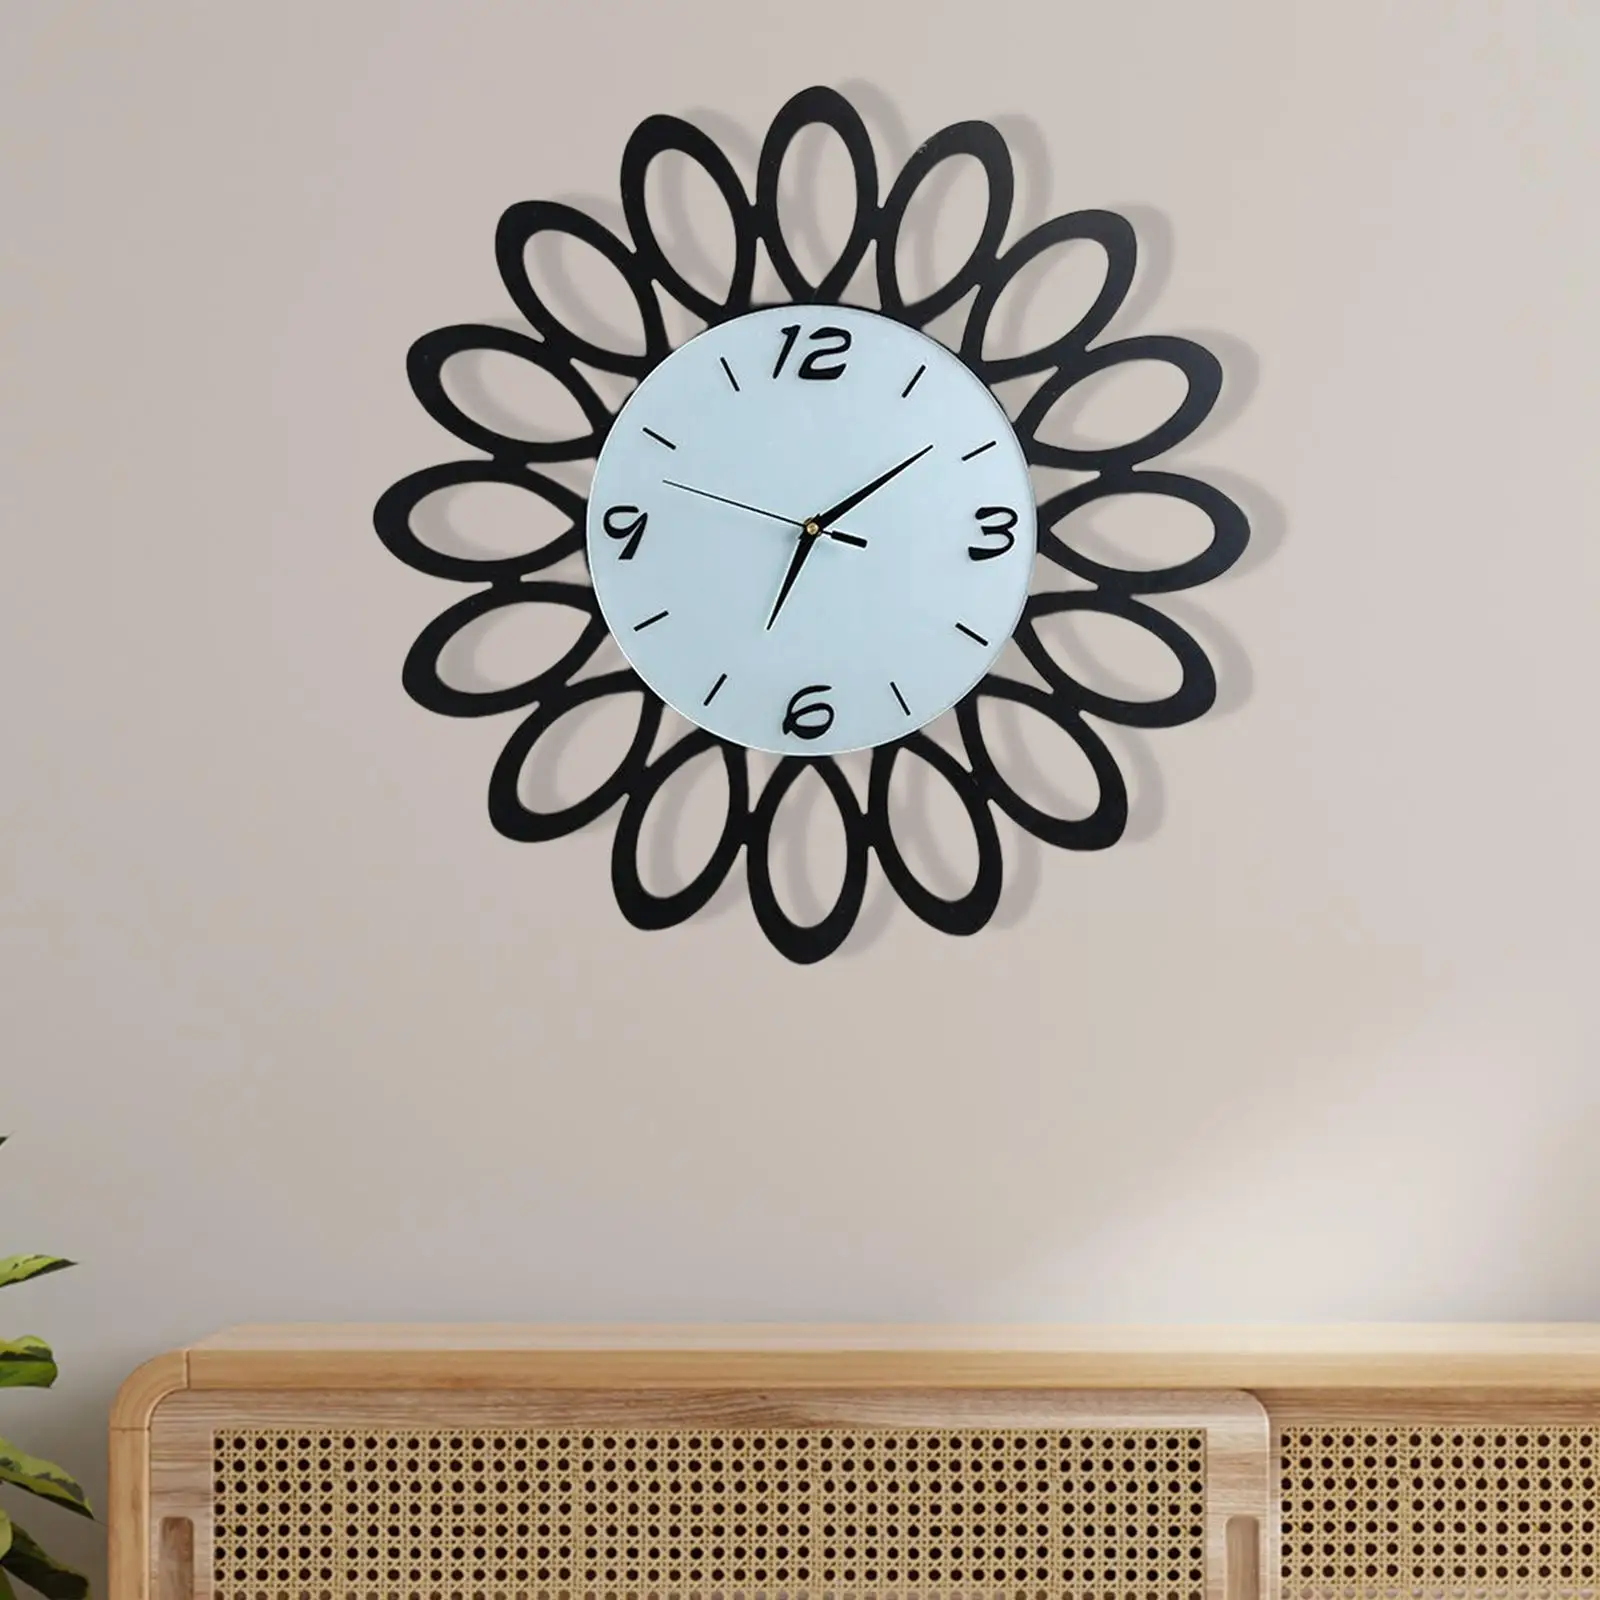 Modern Minimalist Wall Clock Round Unique Design 22 inch Non Ticking Fashion Silent Creative for Kitchen Home Office Wall Decor